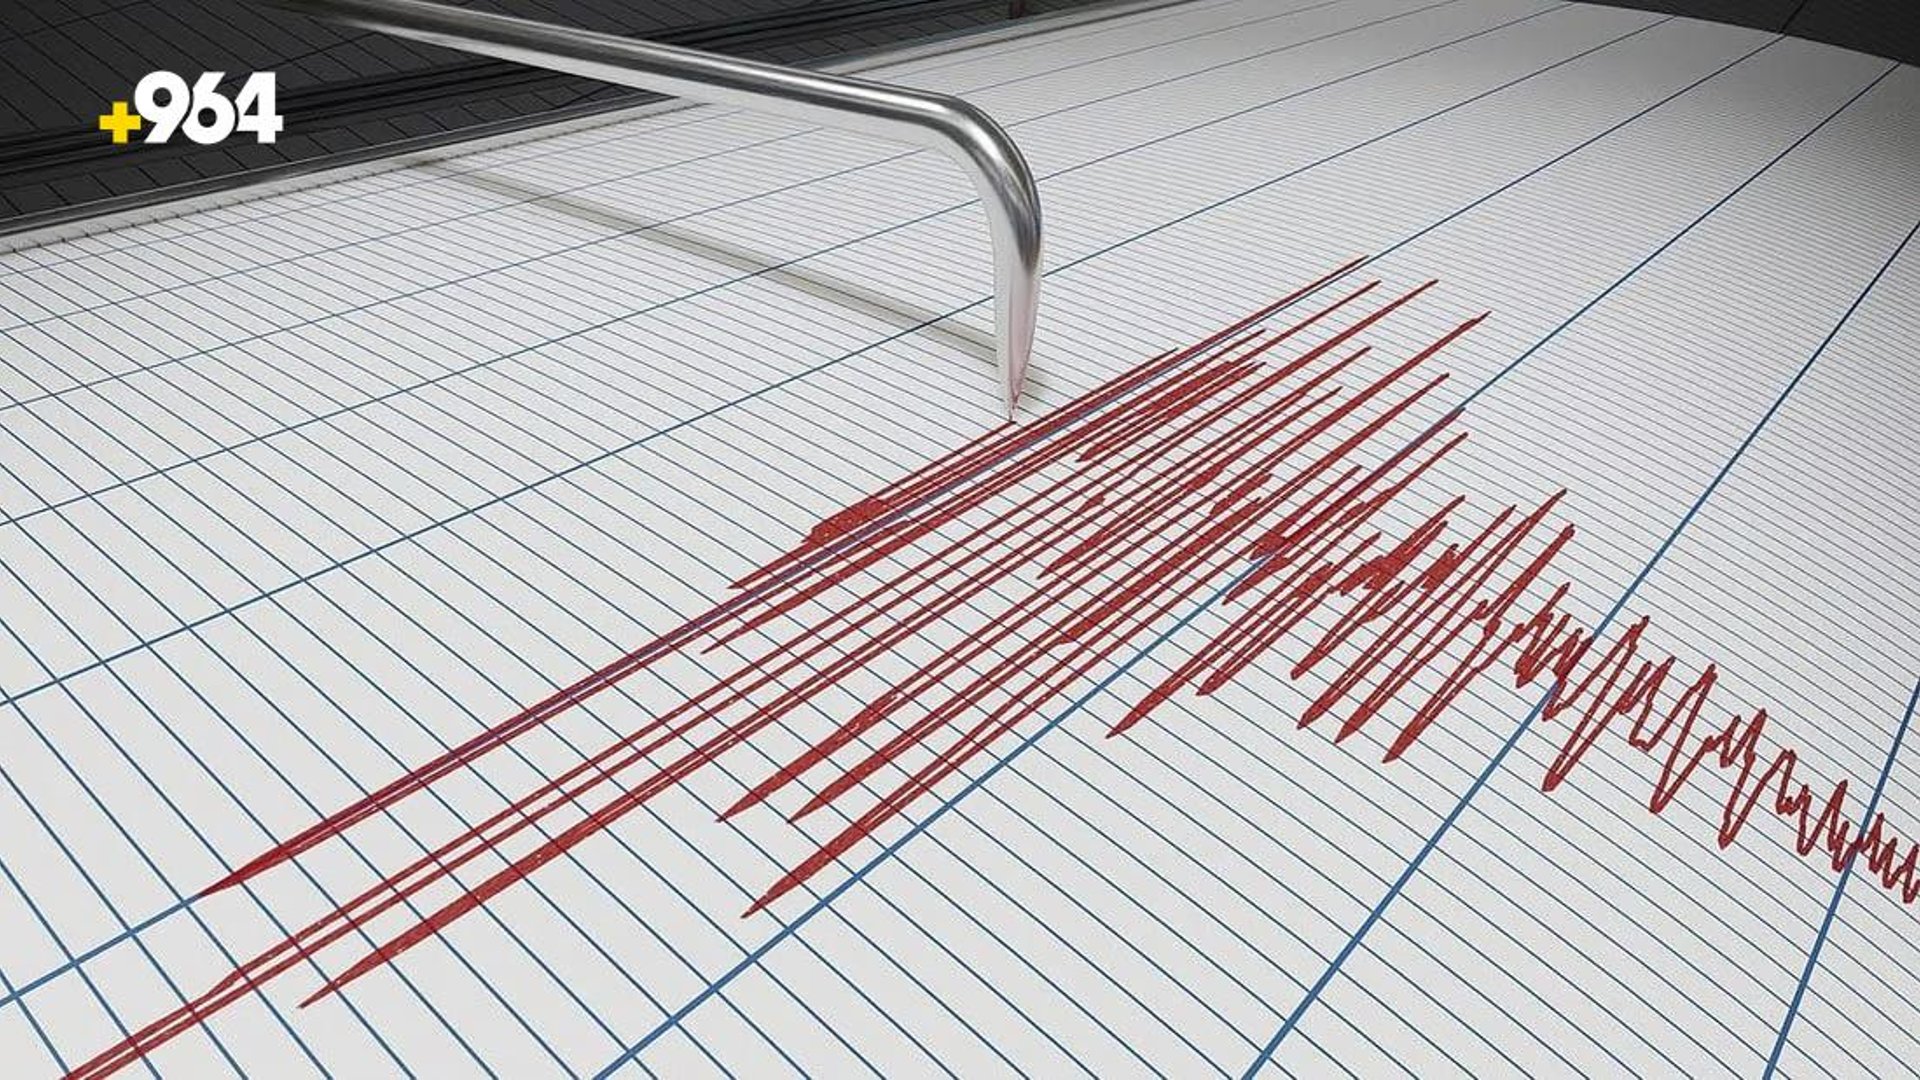 Magnitude earthquake recorded in Wasit province Iraq